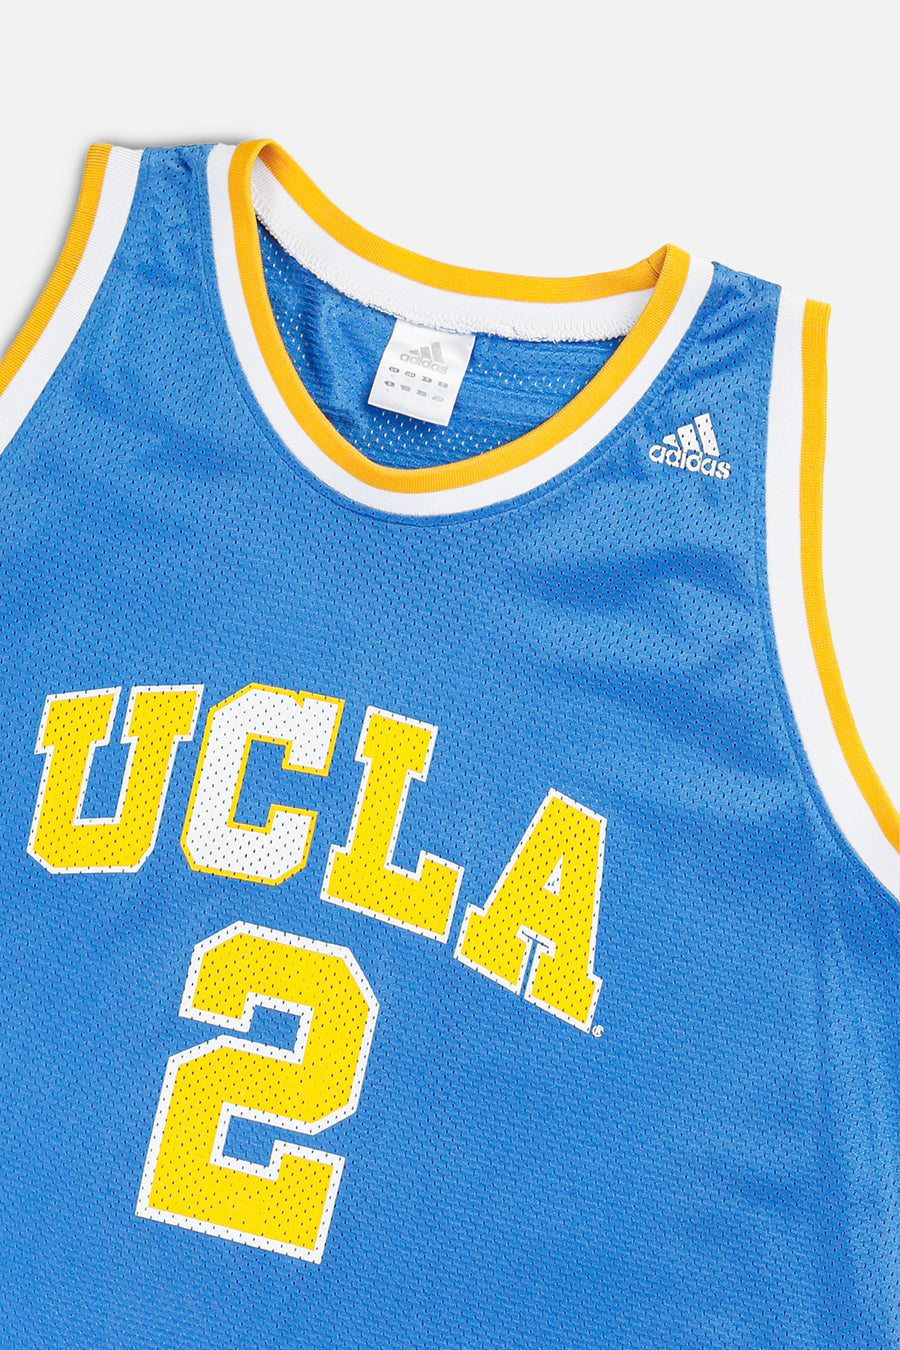 Vintage UCLA Basketball Jersey - XL